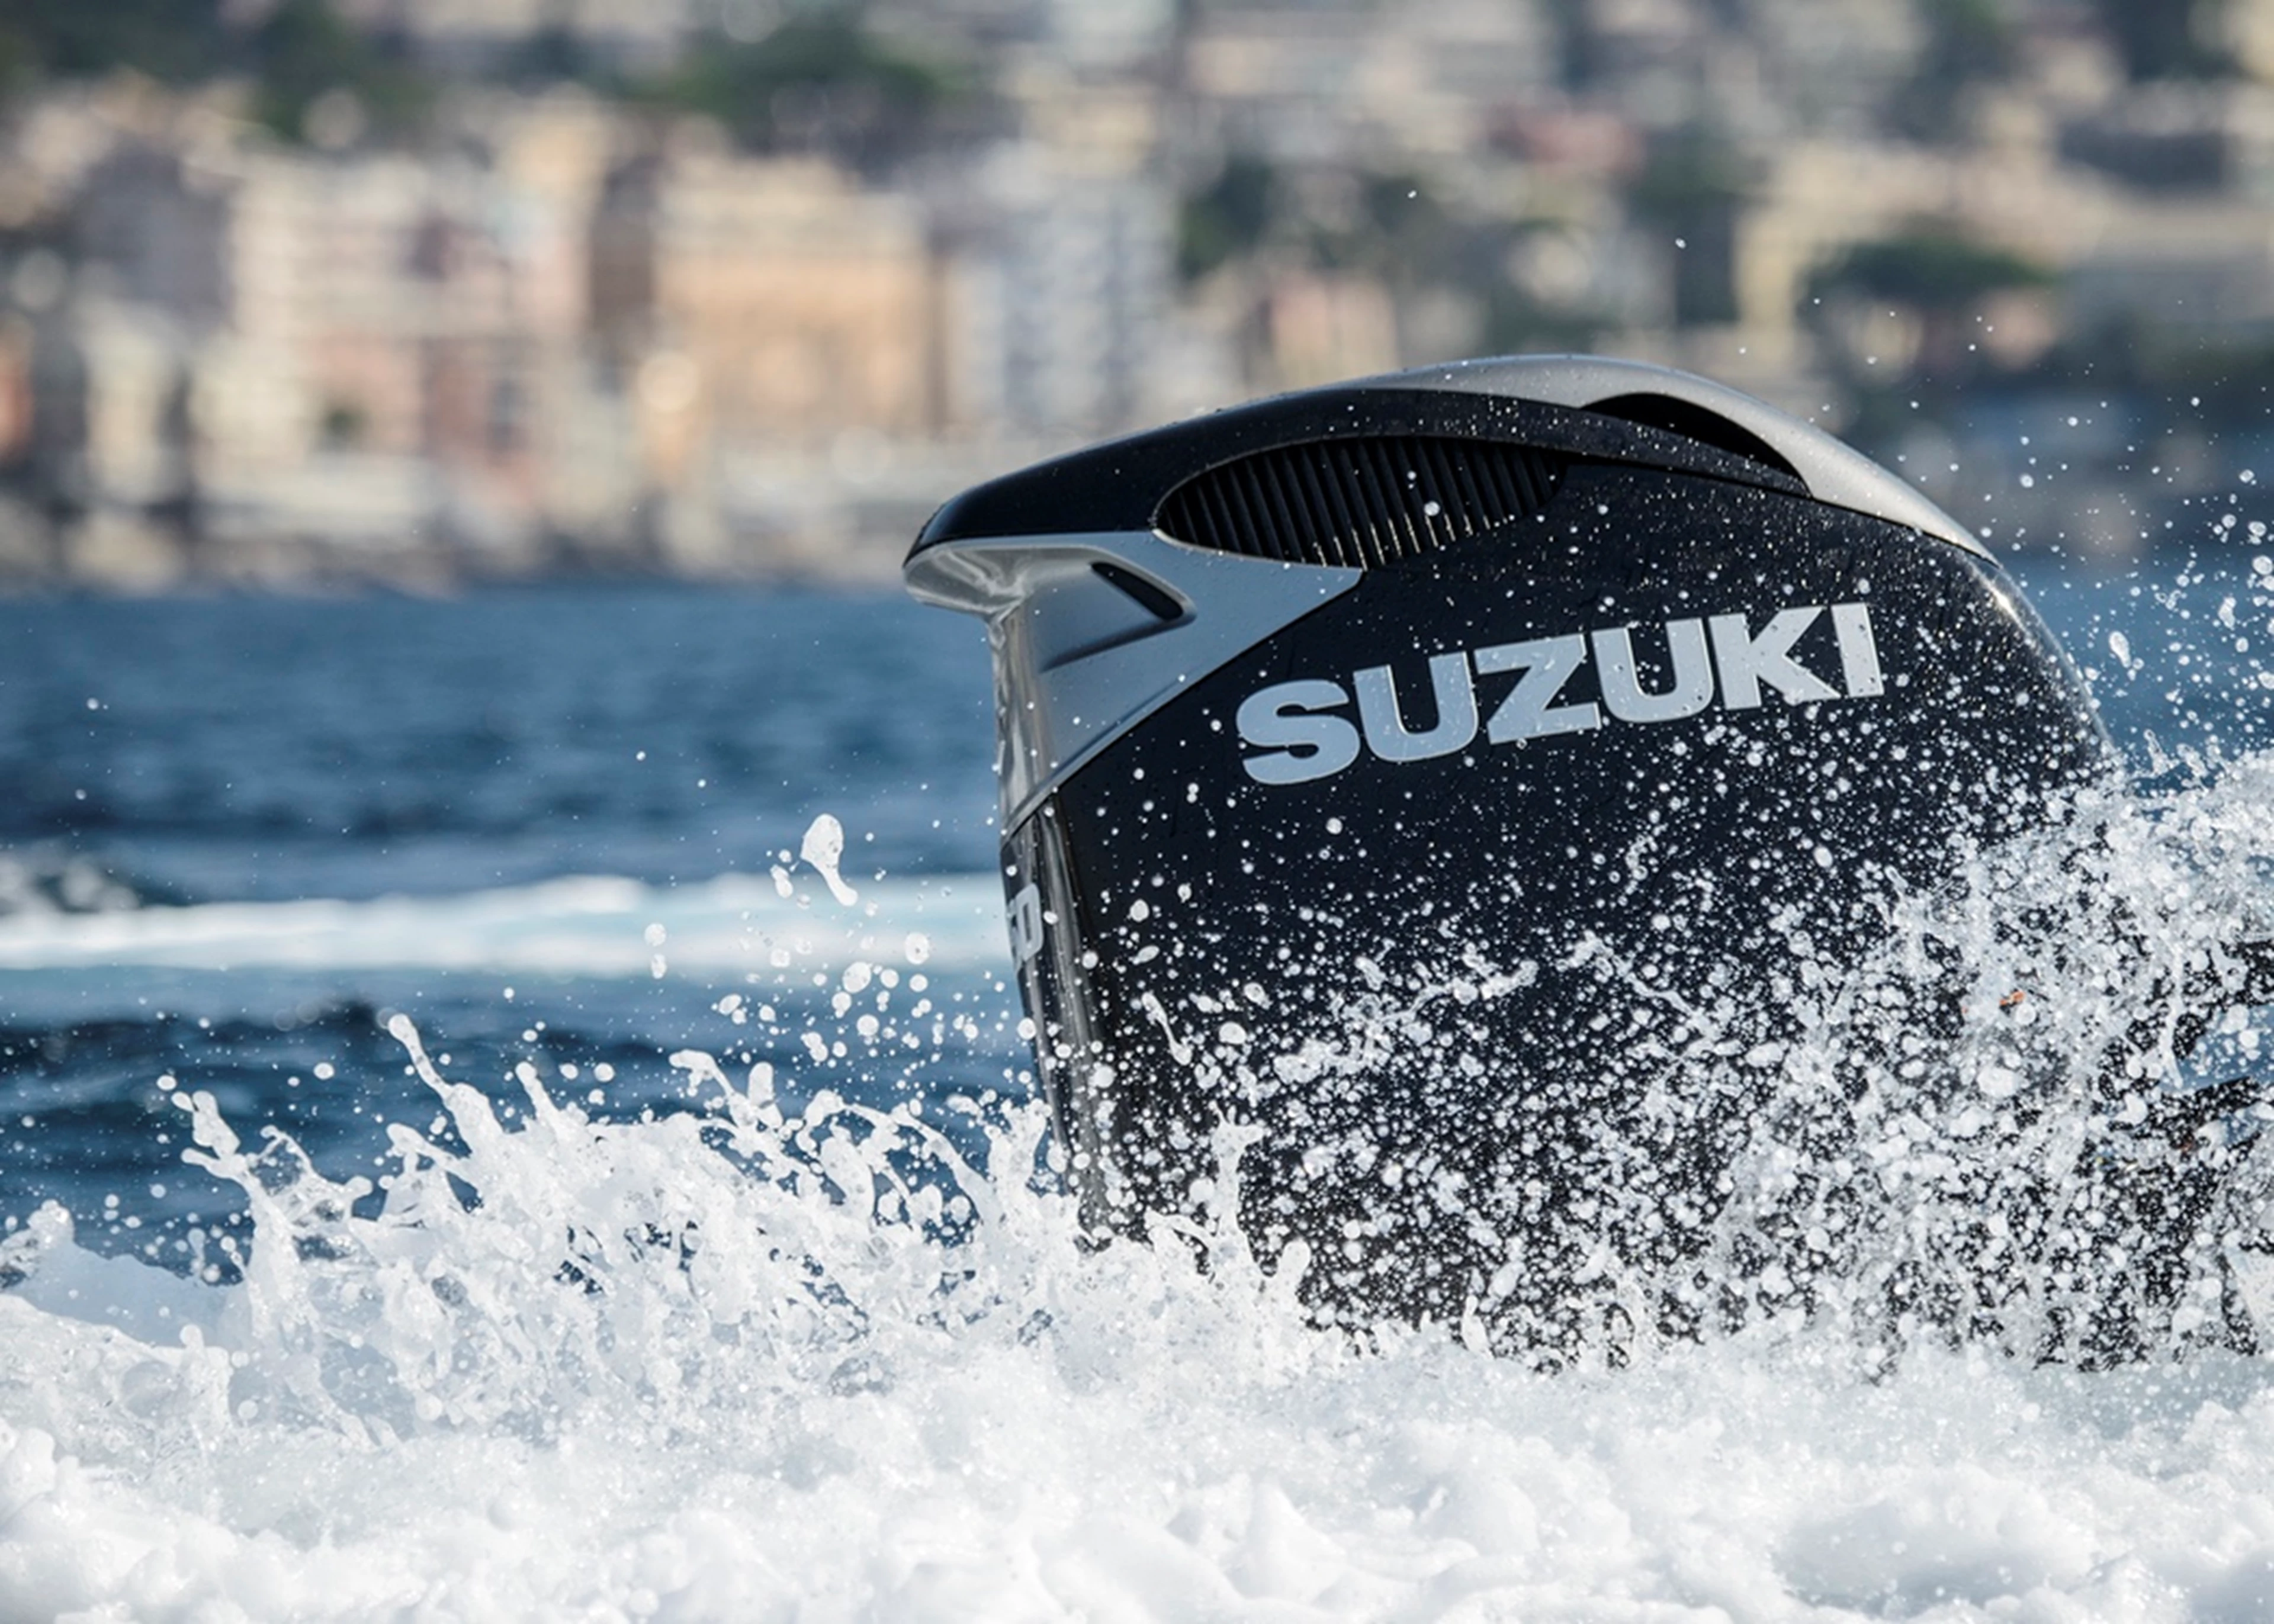 Suzuki outboard on water